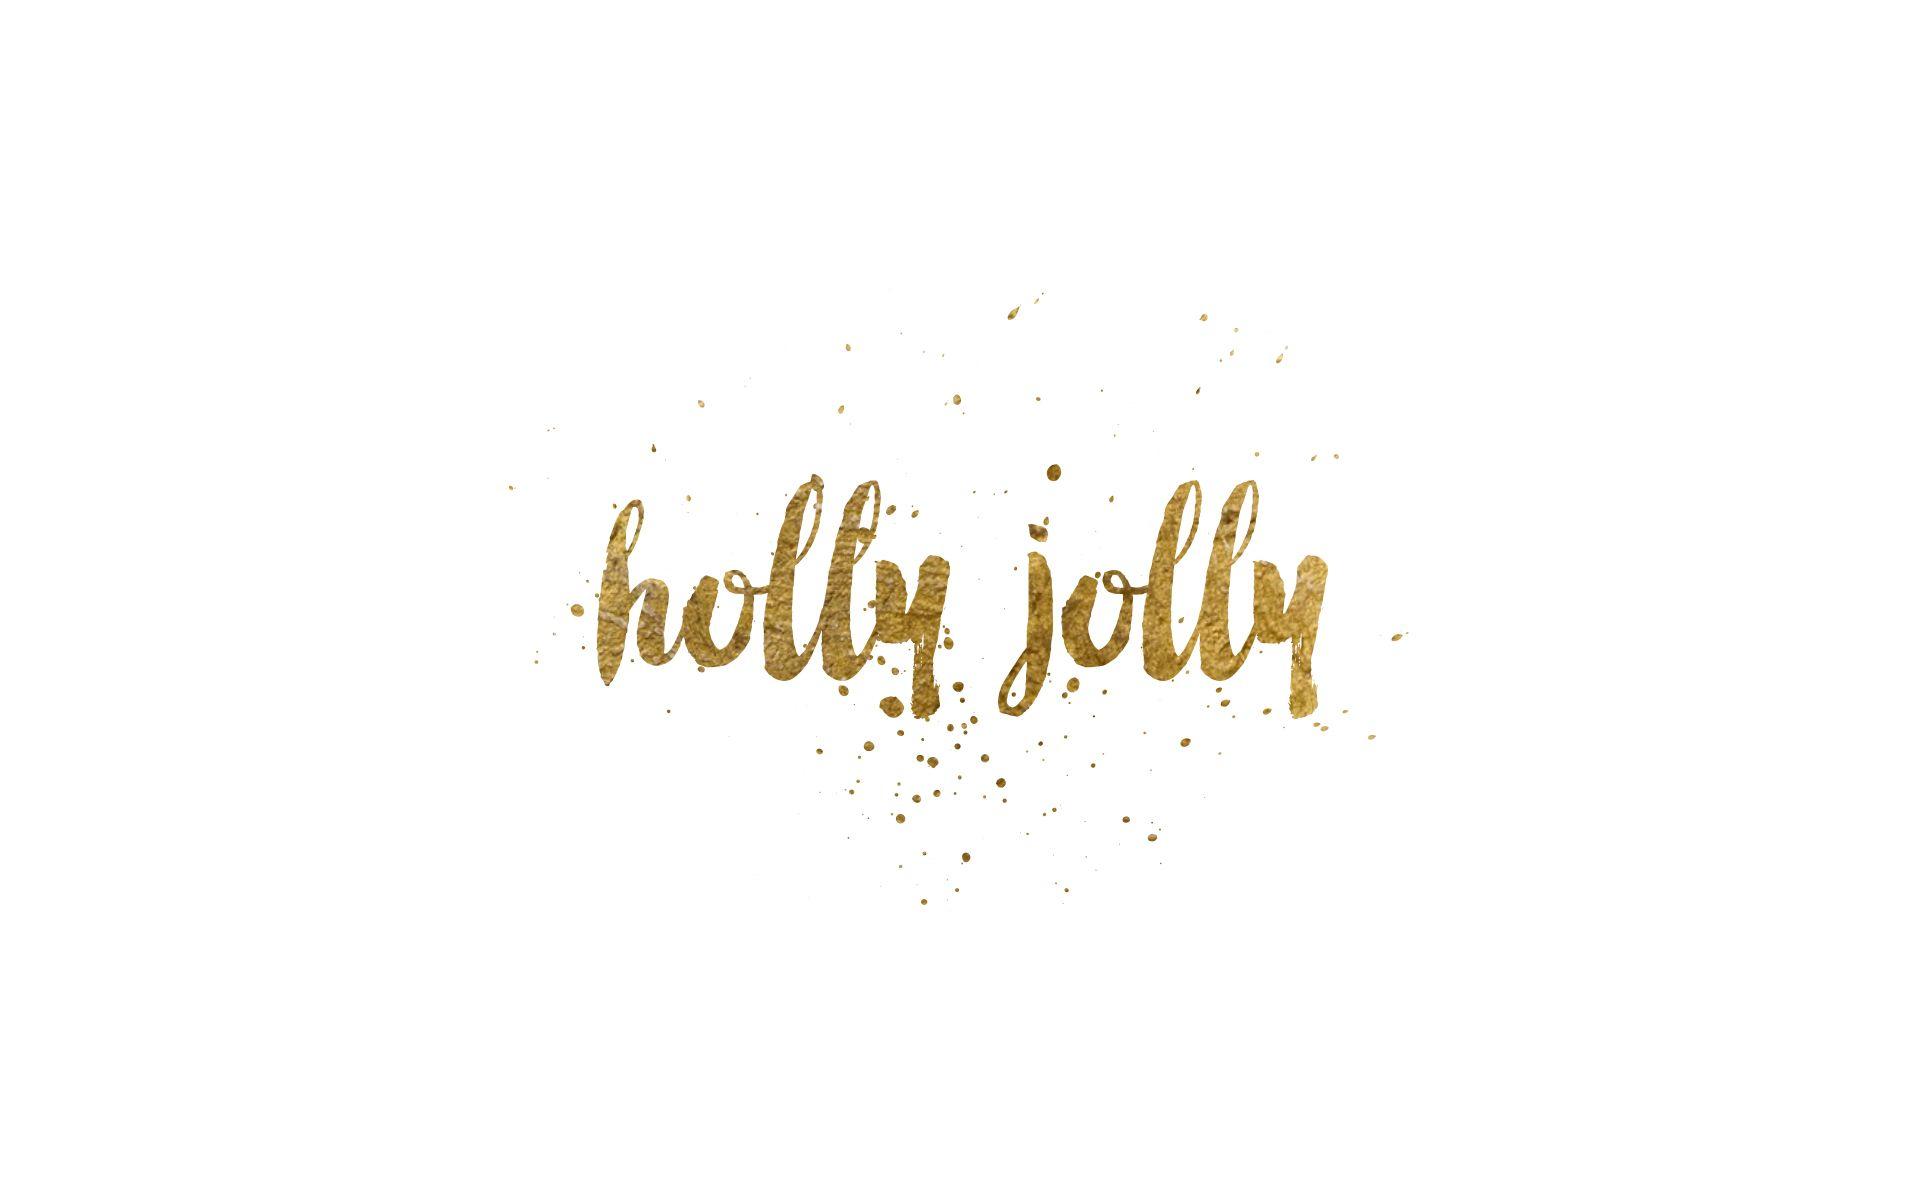 holly jolly gold foil desktop wallpaper 1920 x 1200 #christmas. Christmas desktop, Christmas desktop wallpaper, Laptop wallpaper